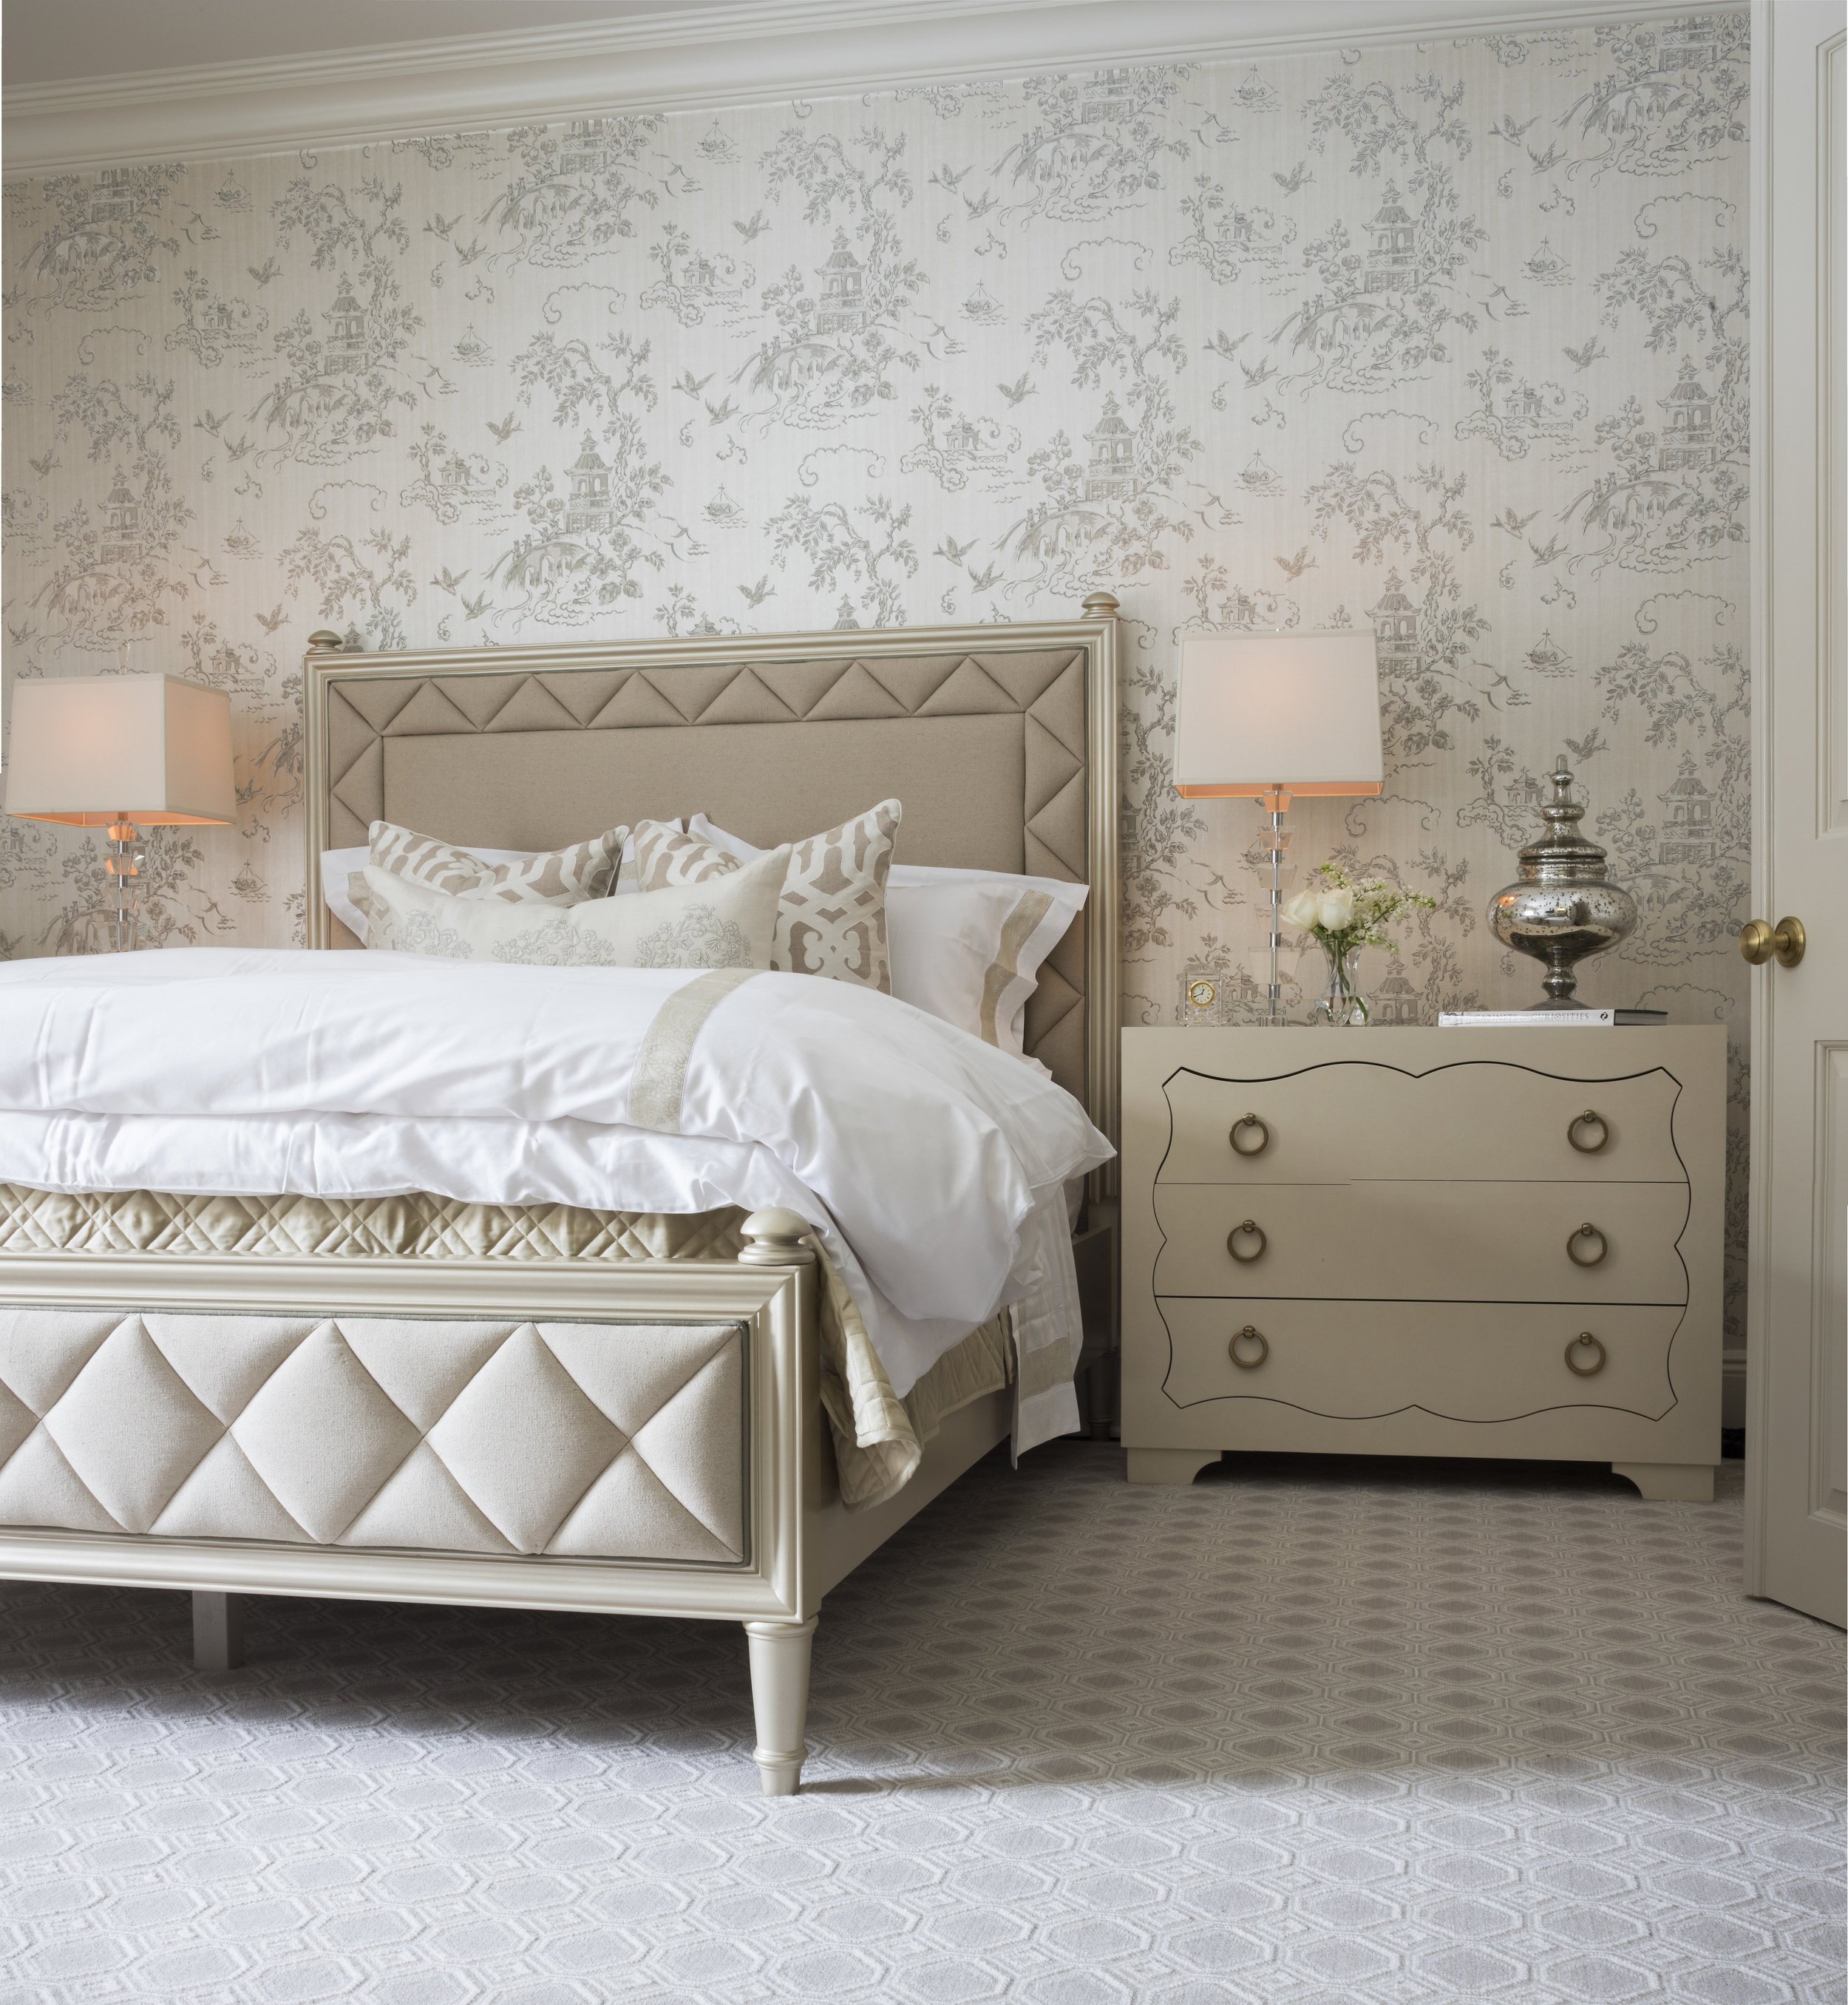 61-bedroom-elegant-chic-cream-wallpaper-rinfret-neoclassical-greenwich-connecticut.JPG